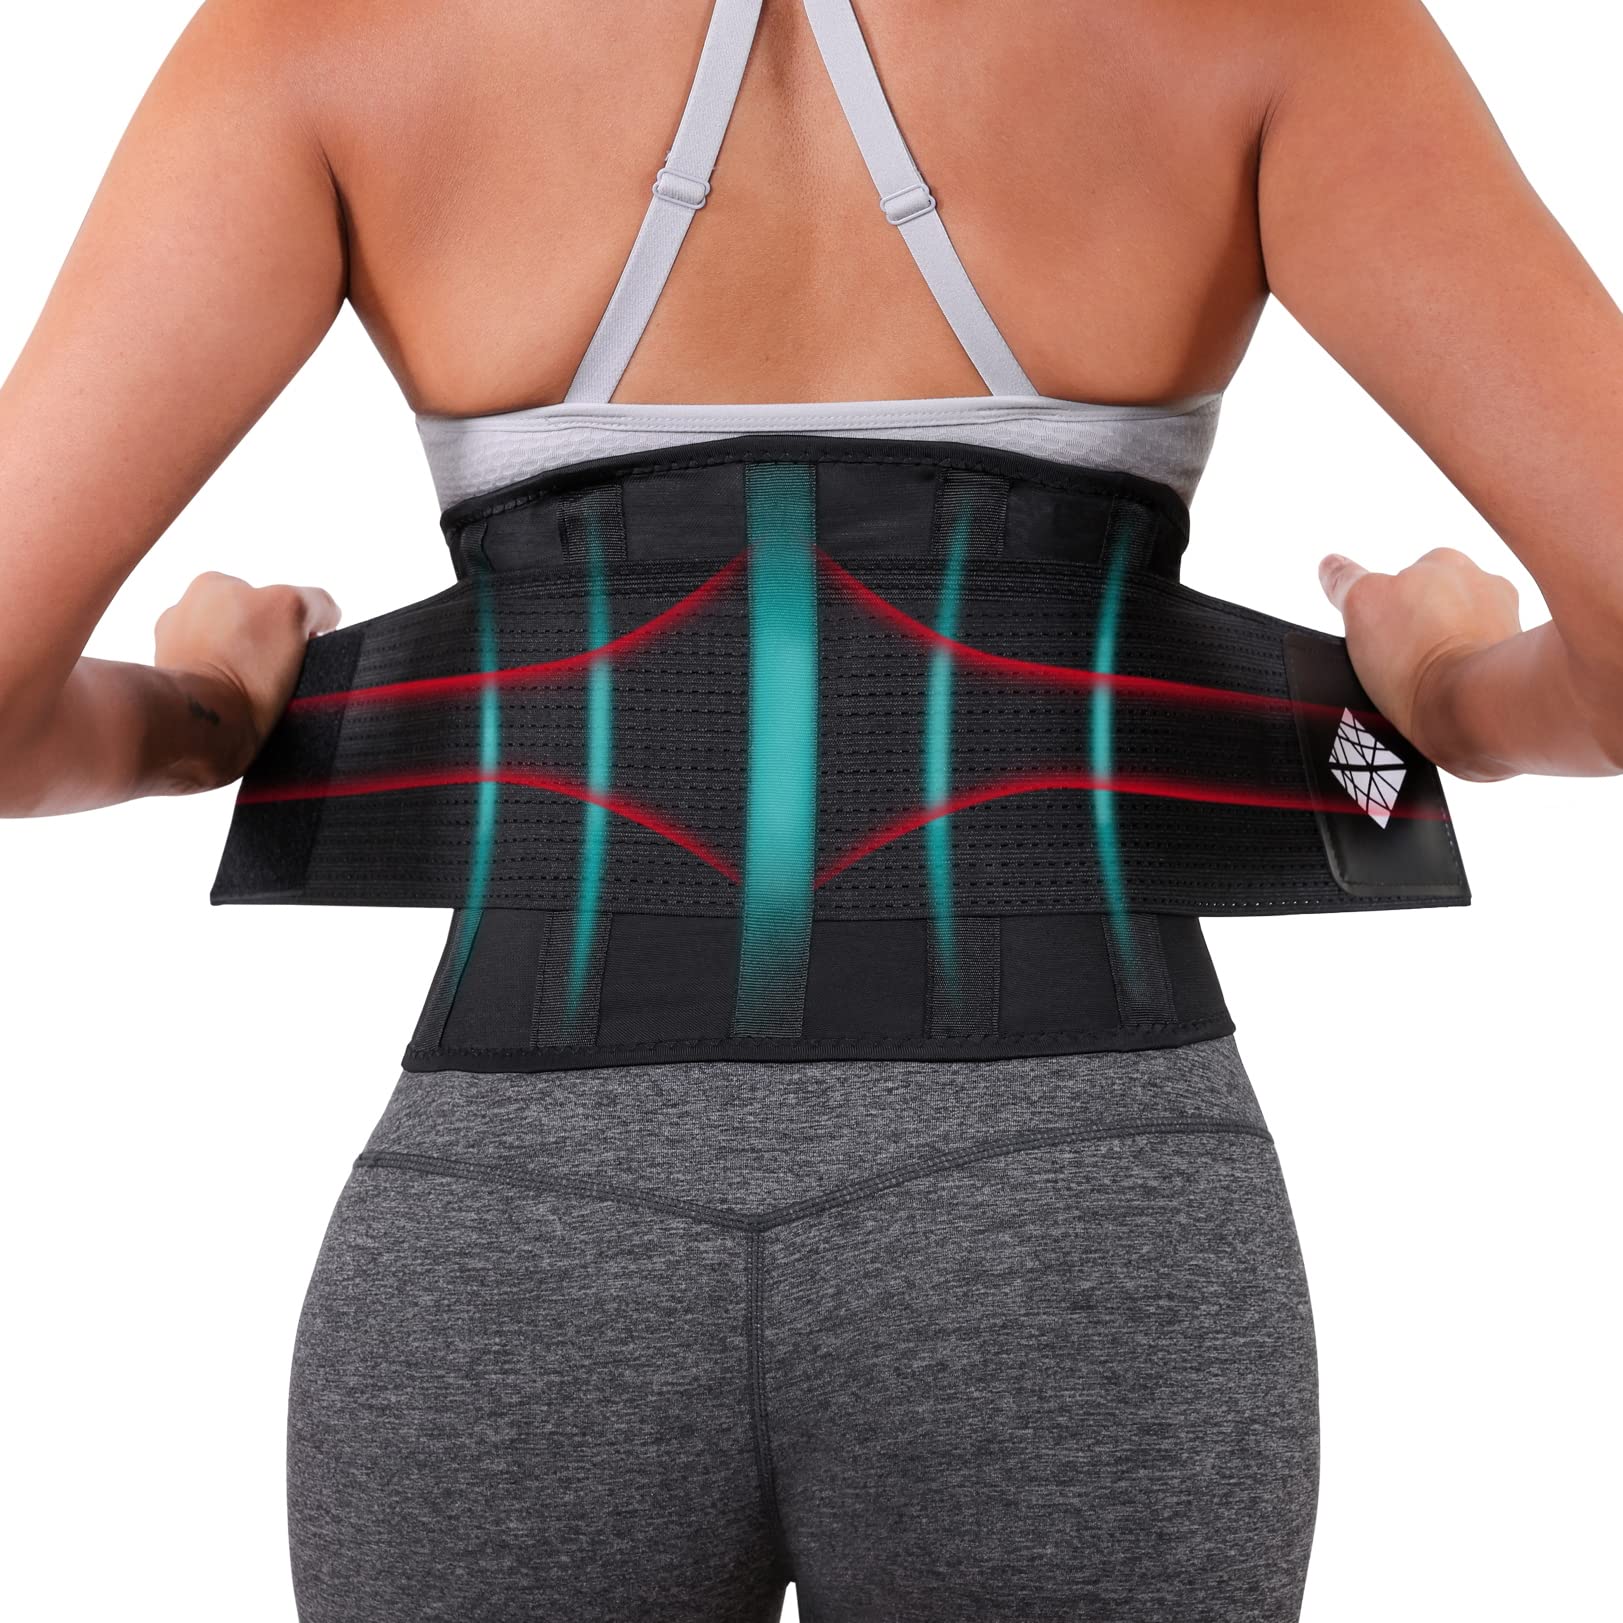 Lower Back Brace lumbar Support Belt, Adjustable Waist Trainer